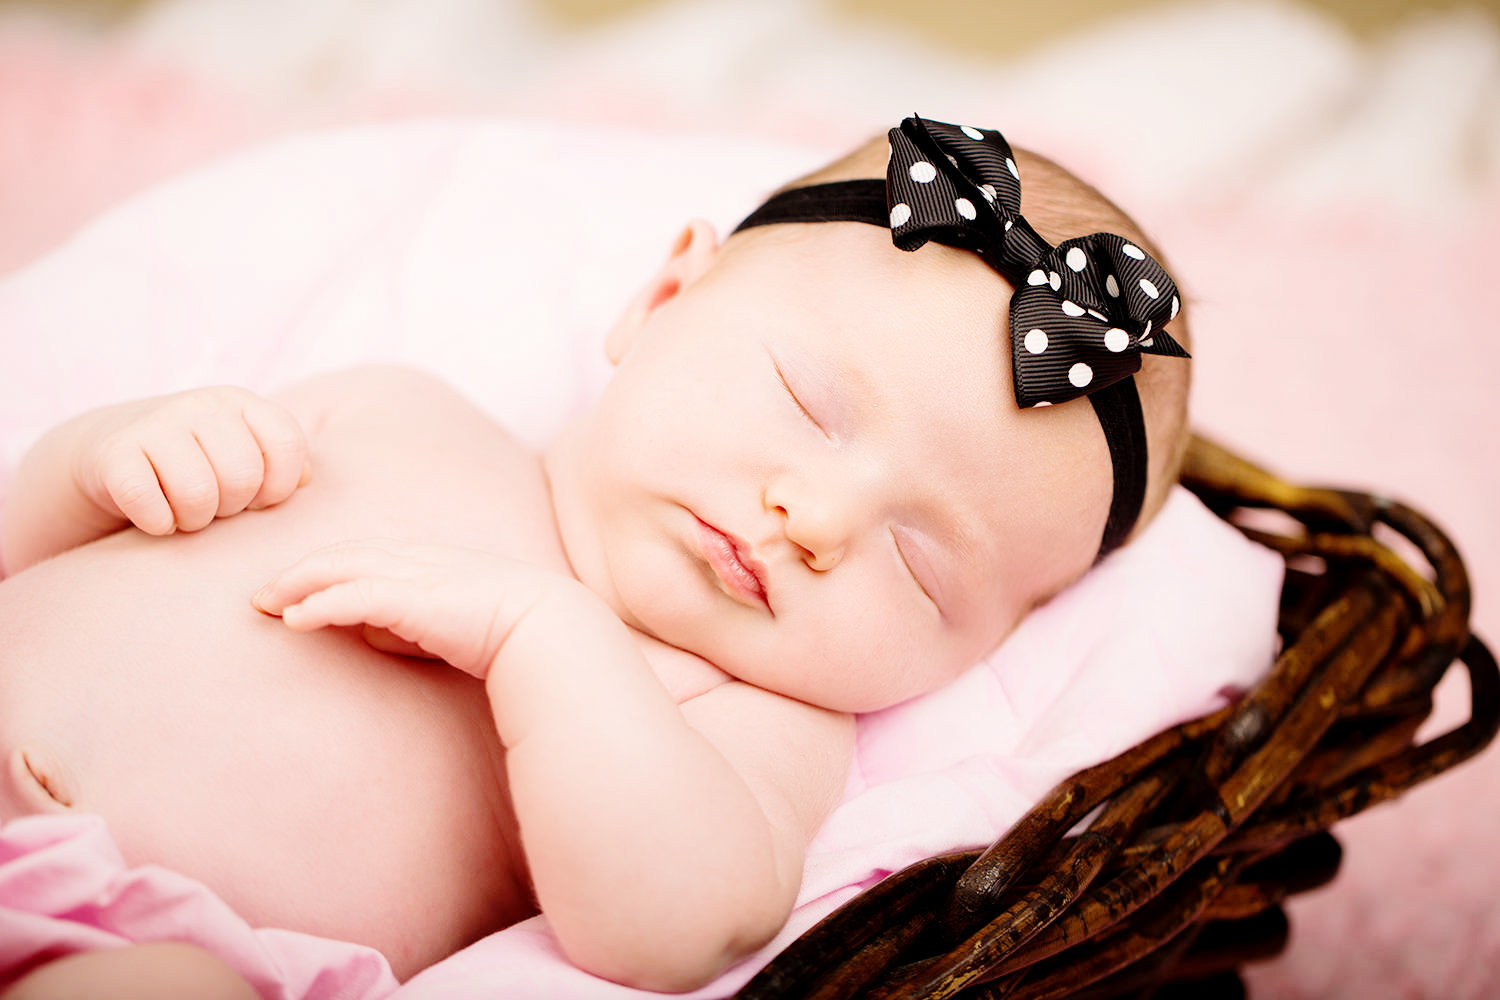 san diego newborn photography | newborn girl with adorable black polka dot bow